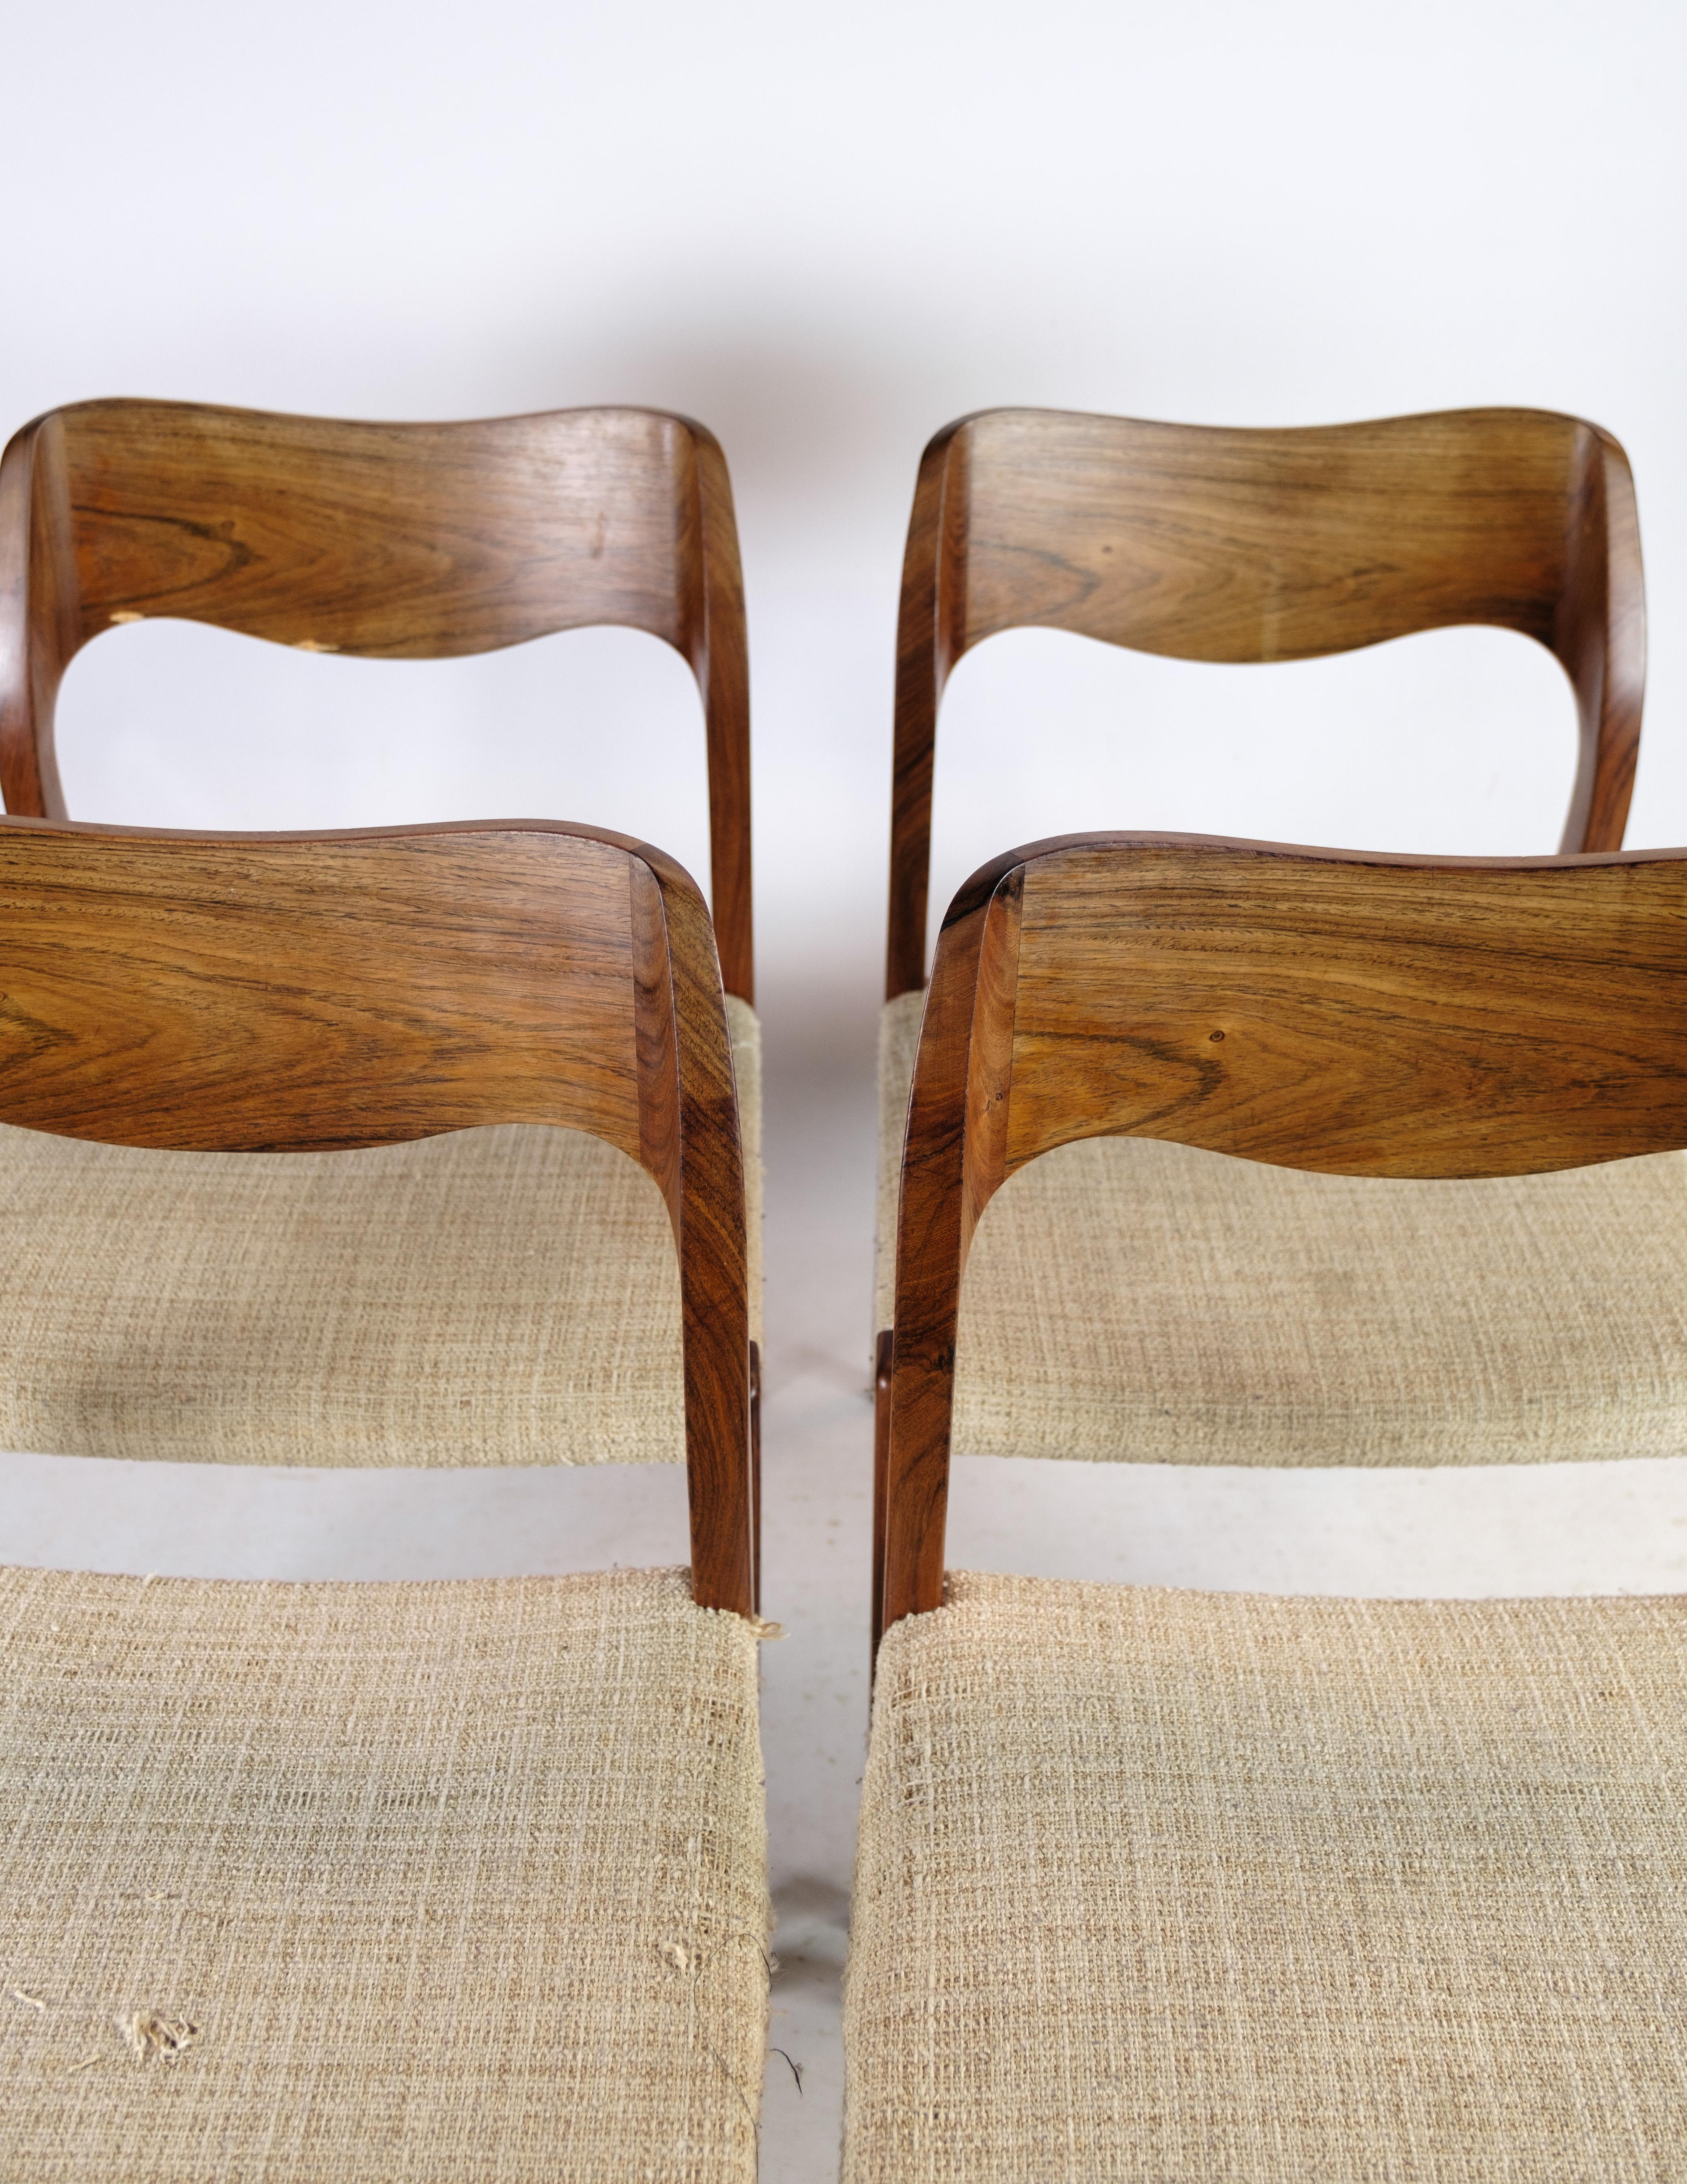 Danish Mid-Century Modern Set of 4 Dining Chairs in Rosewood, Model 71, N.O Møller